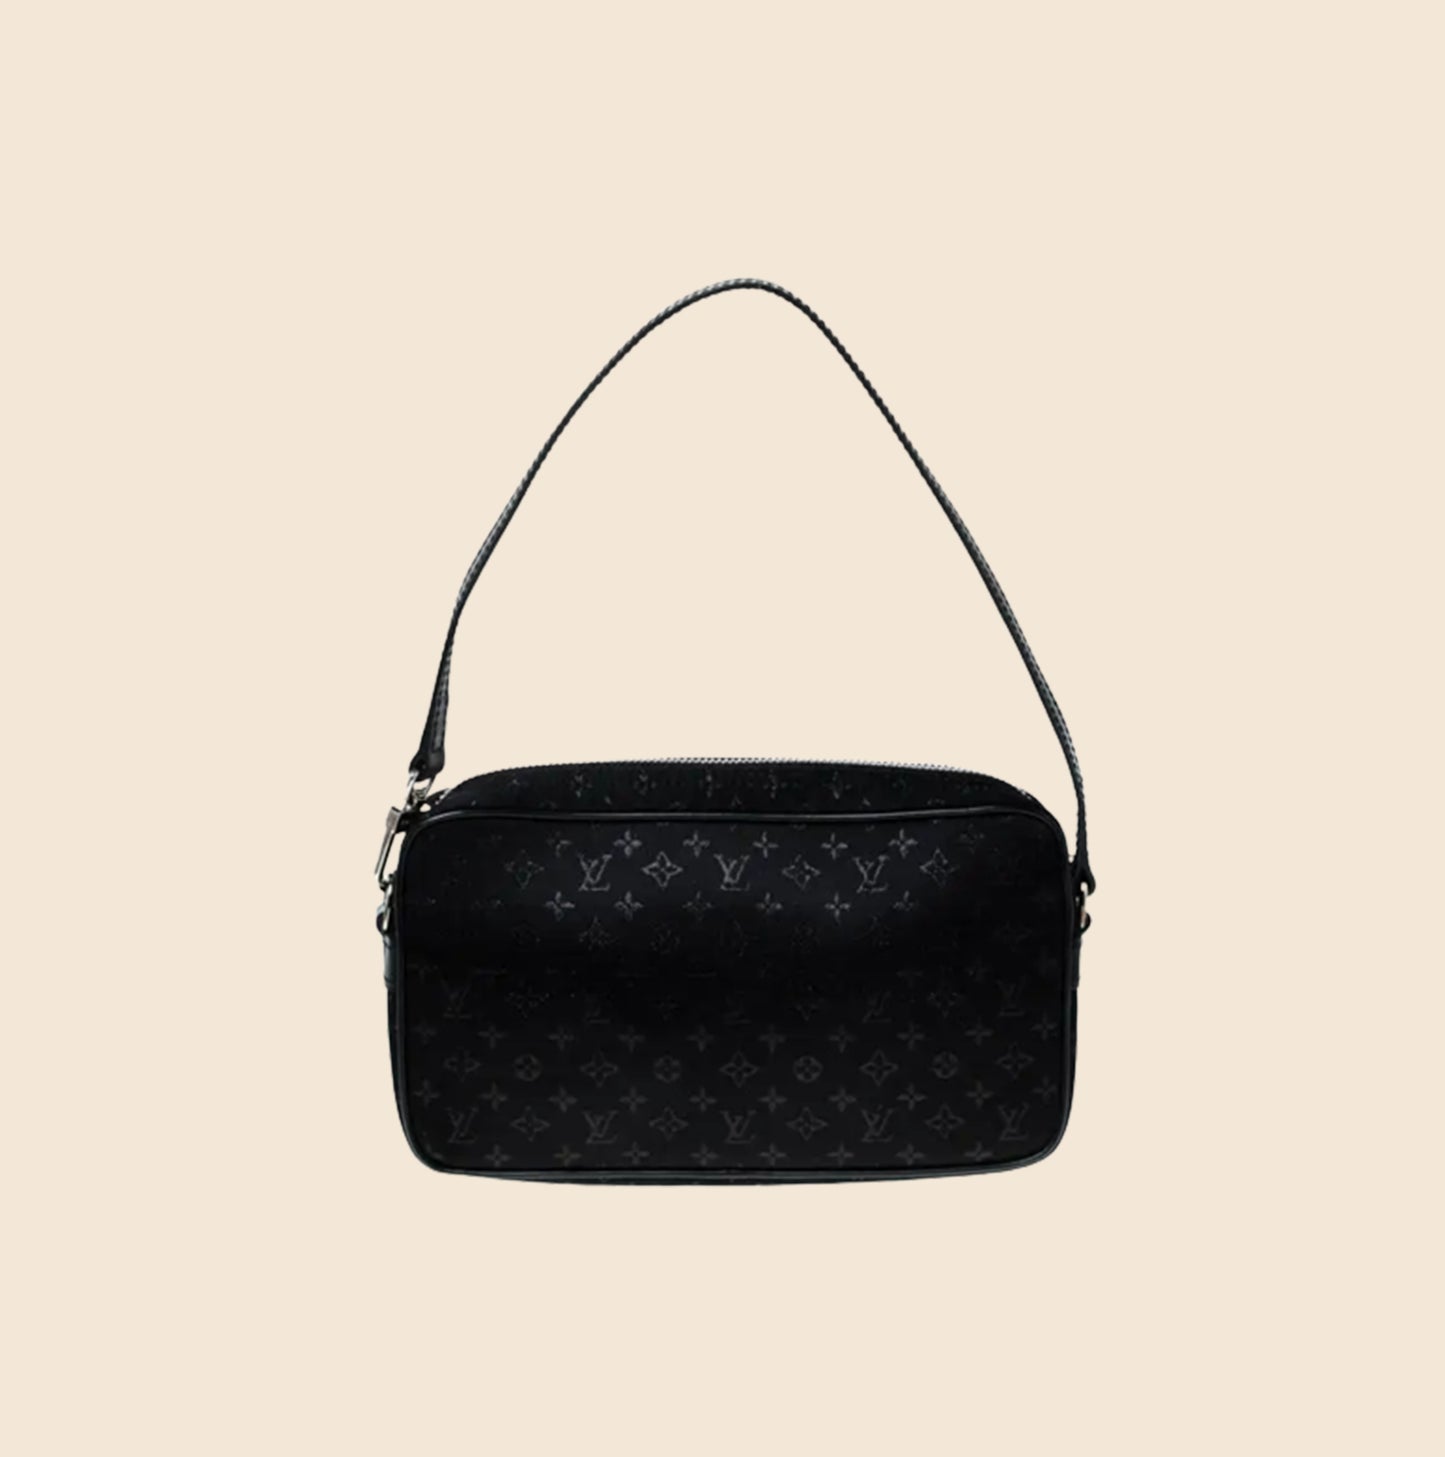 Louis Vuitton conte de fees butterfly shoulder bag worn by Bella